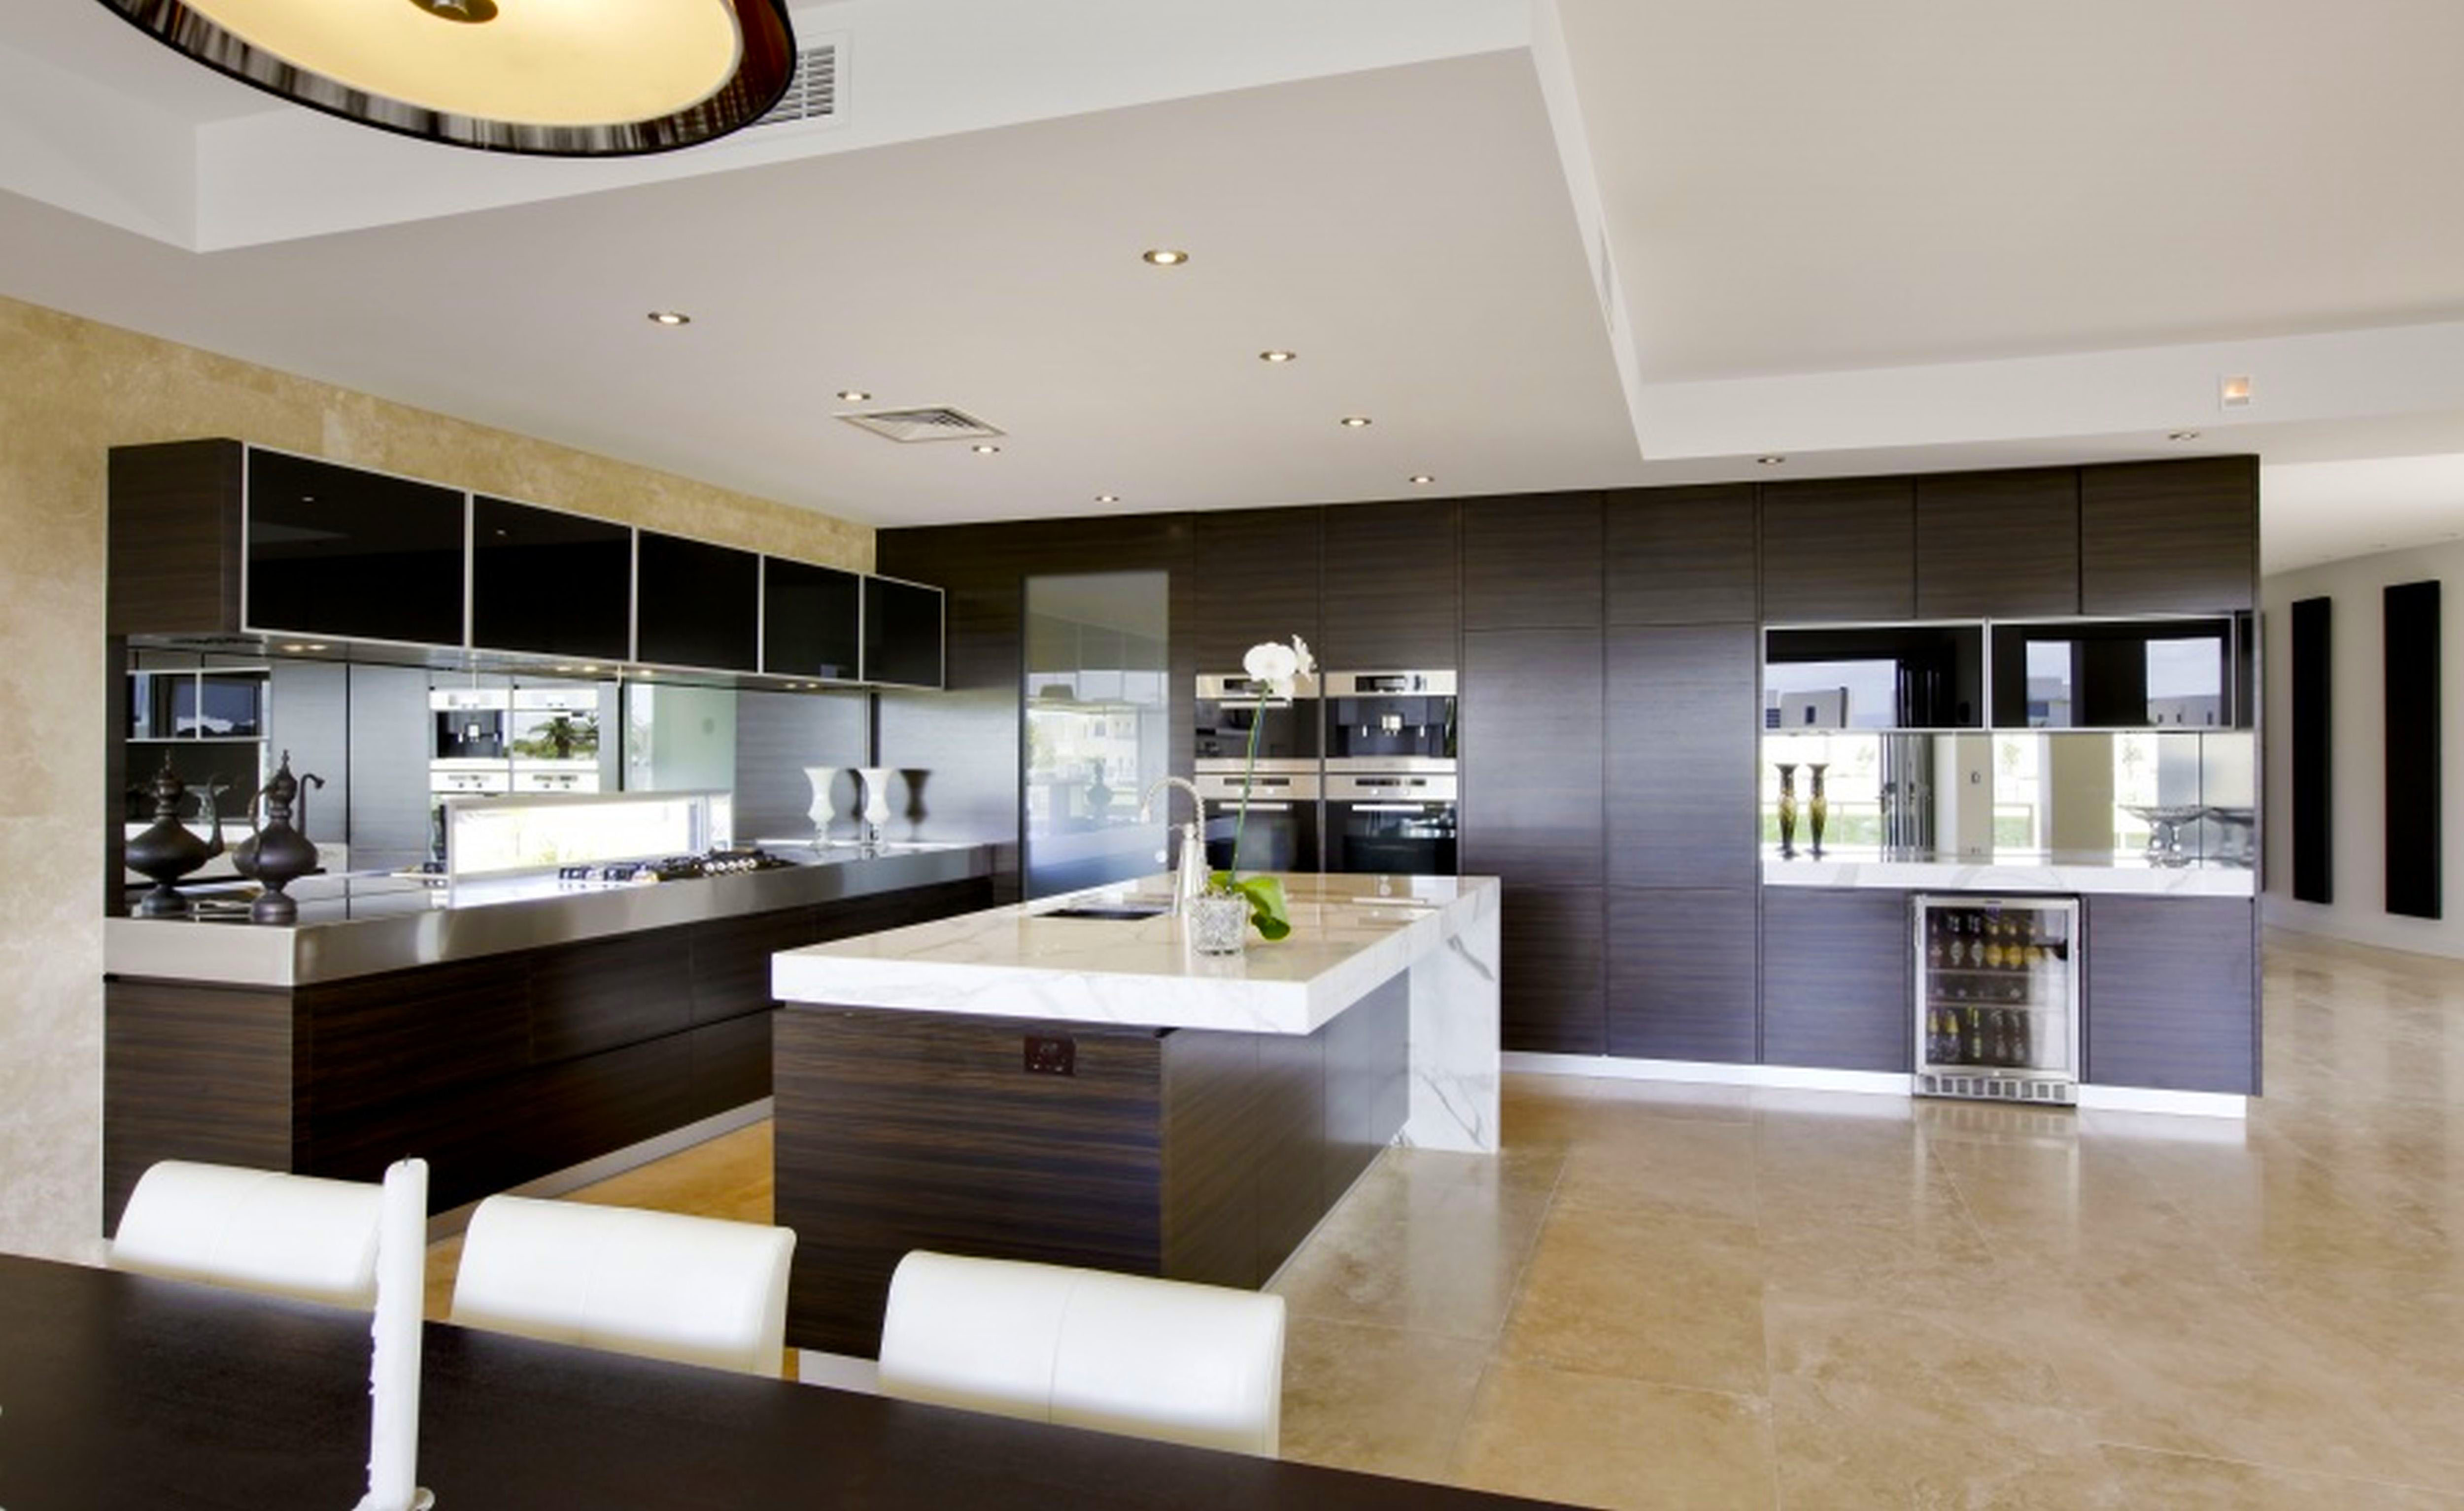 interior design of the kitchen